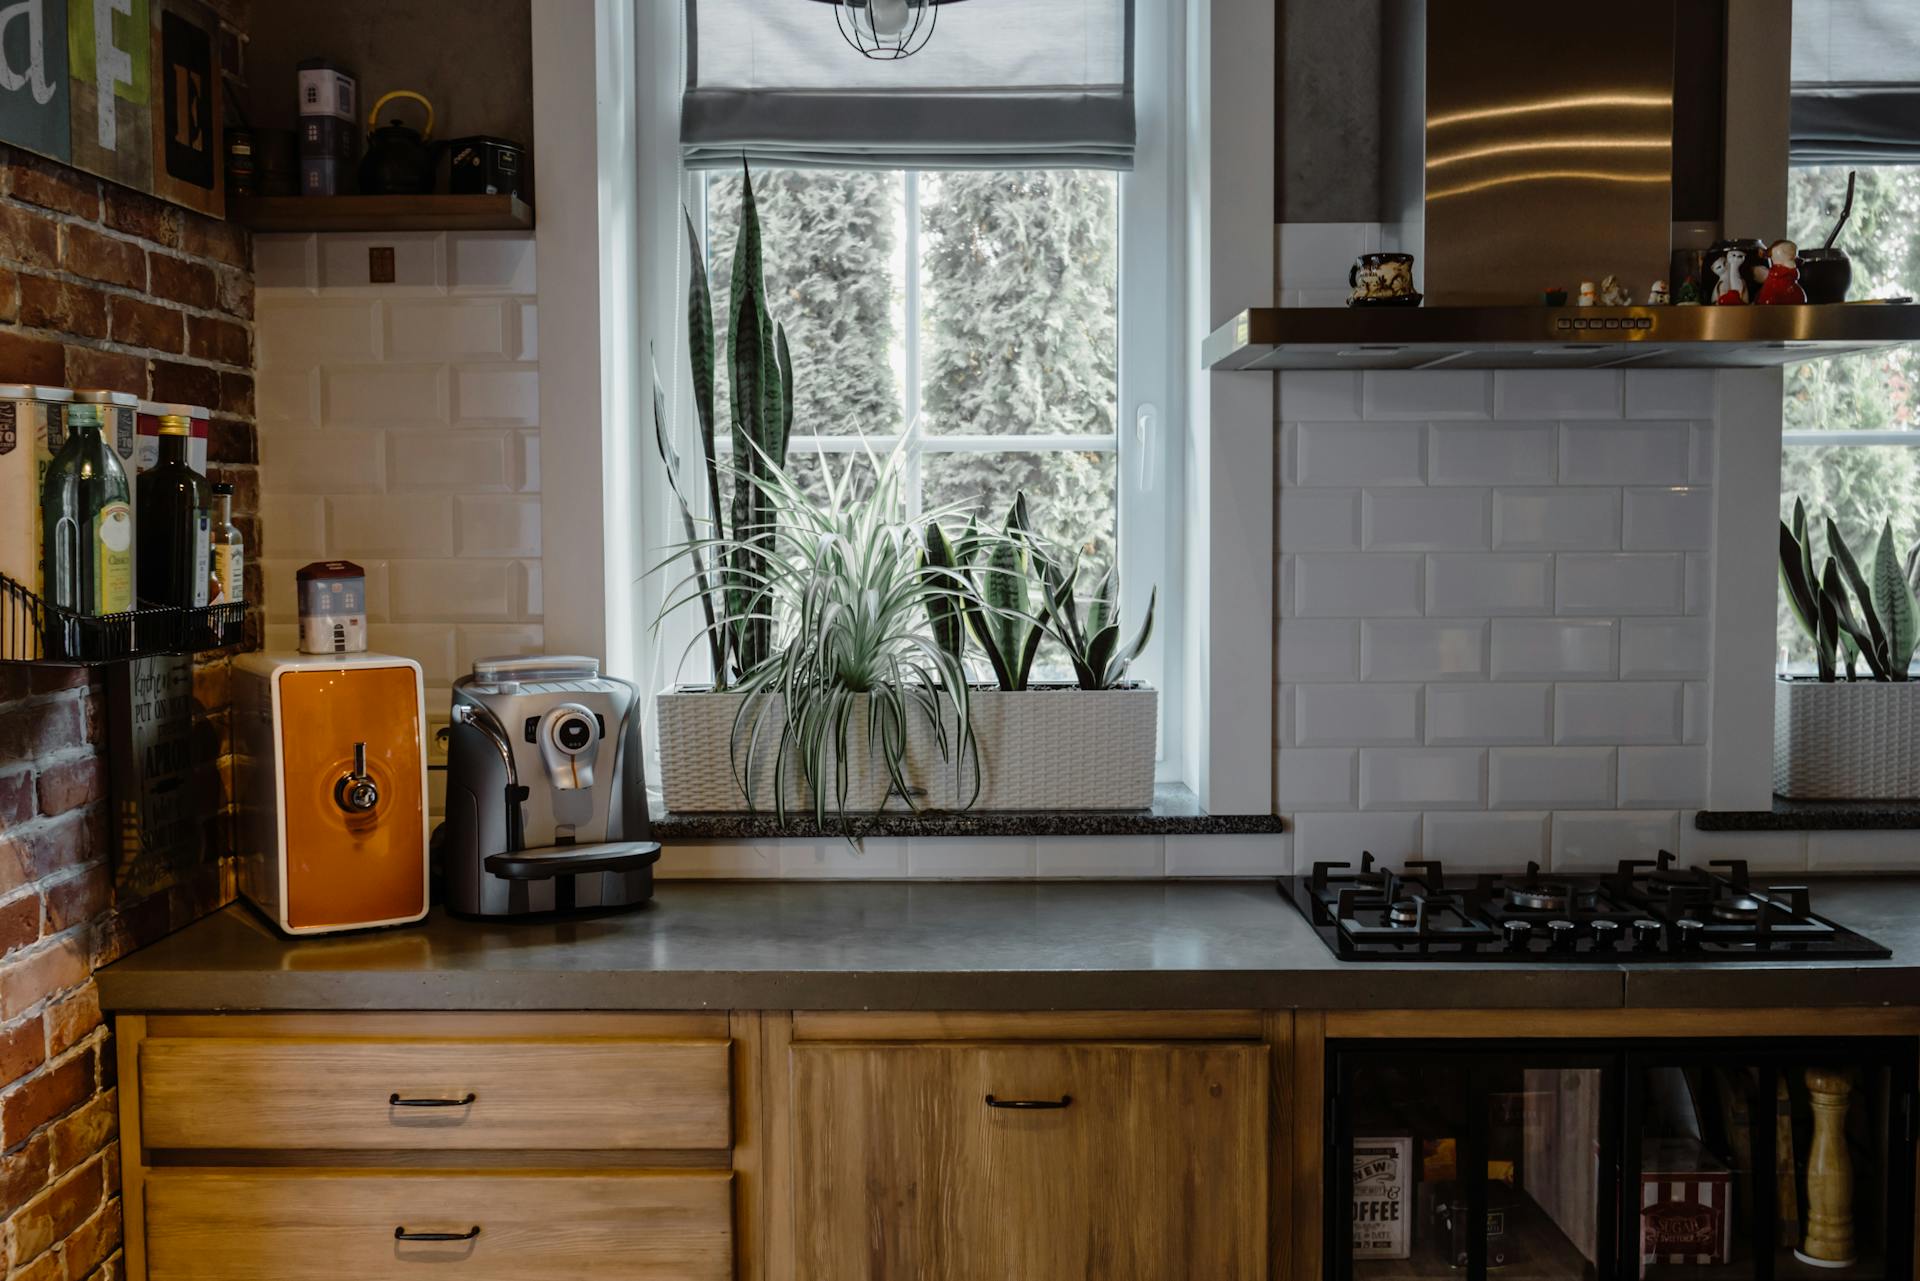 A clean kitchen | Source: Pexels